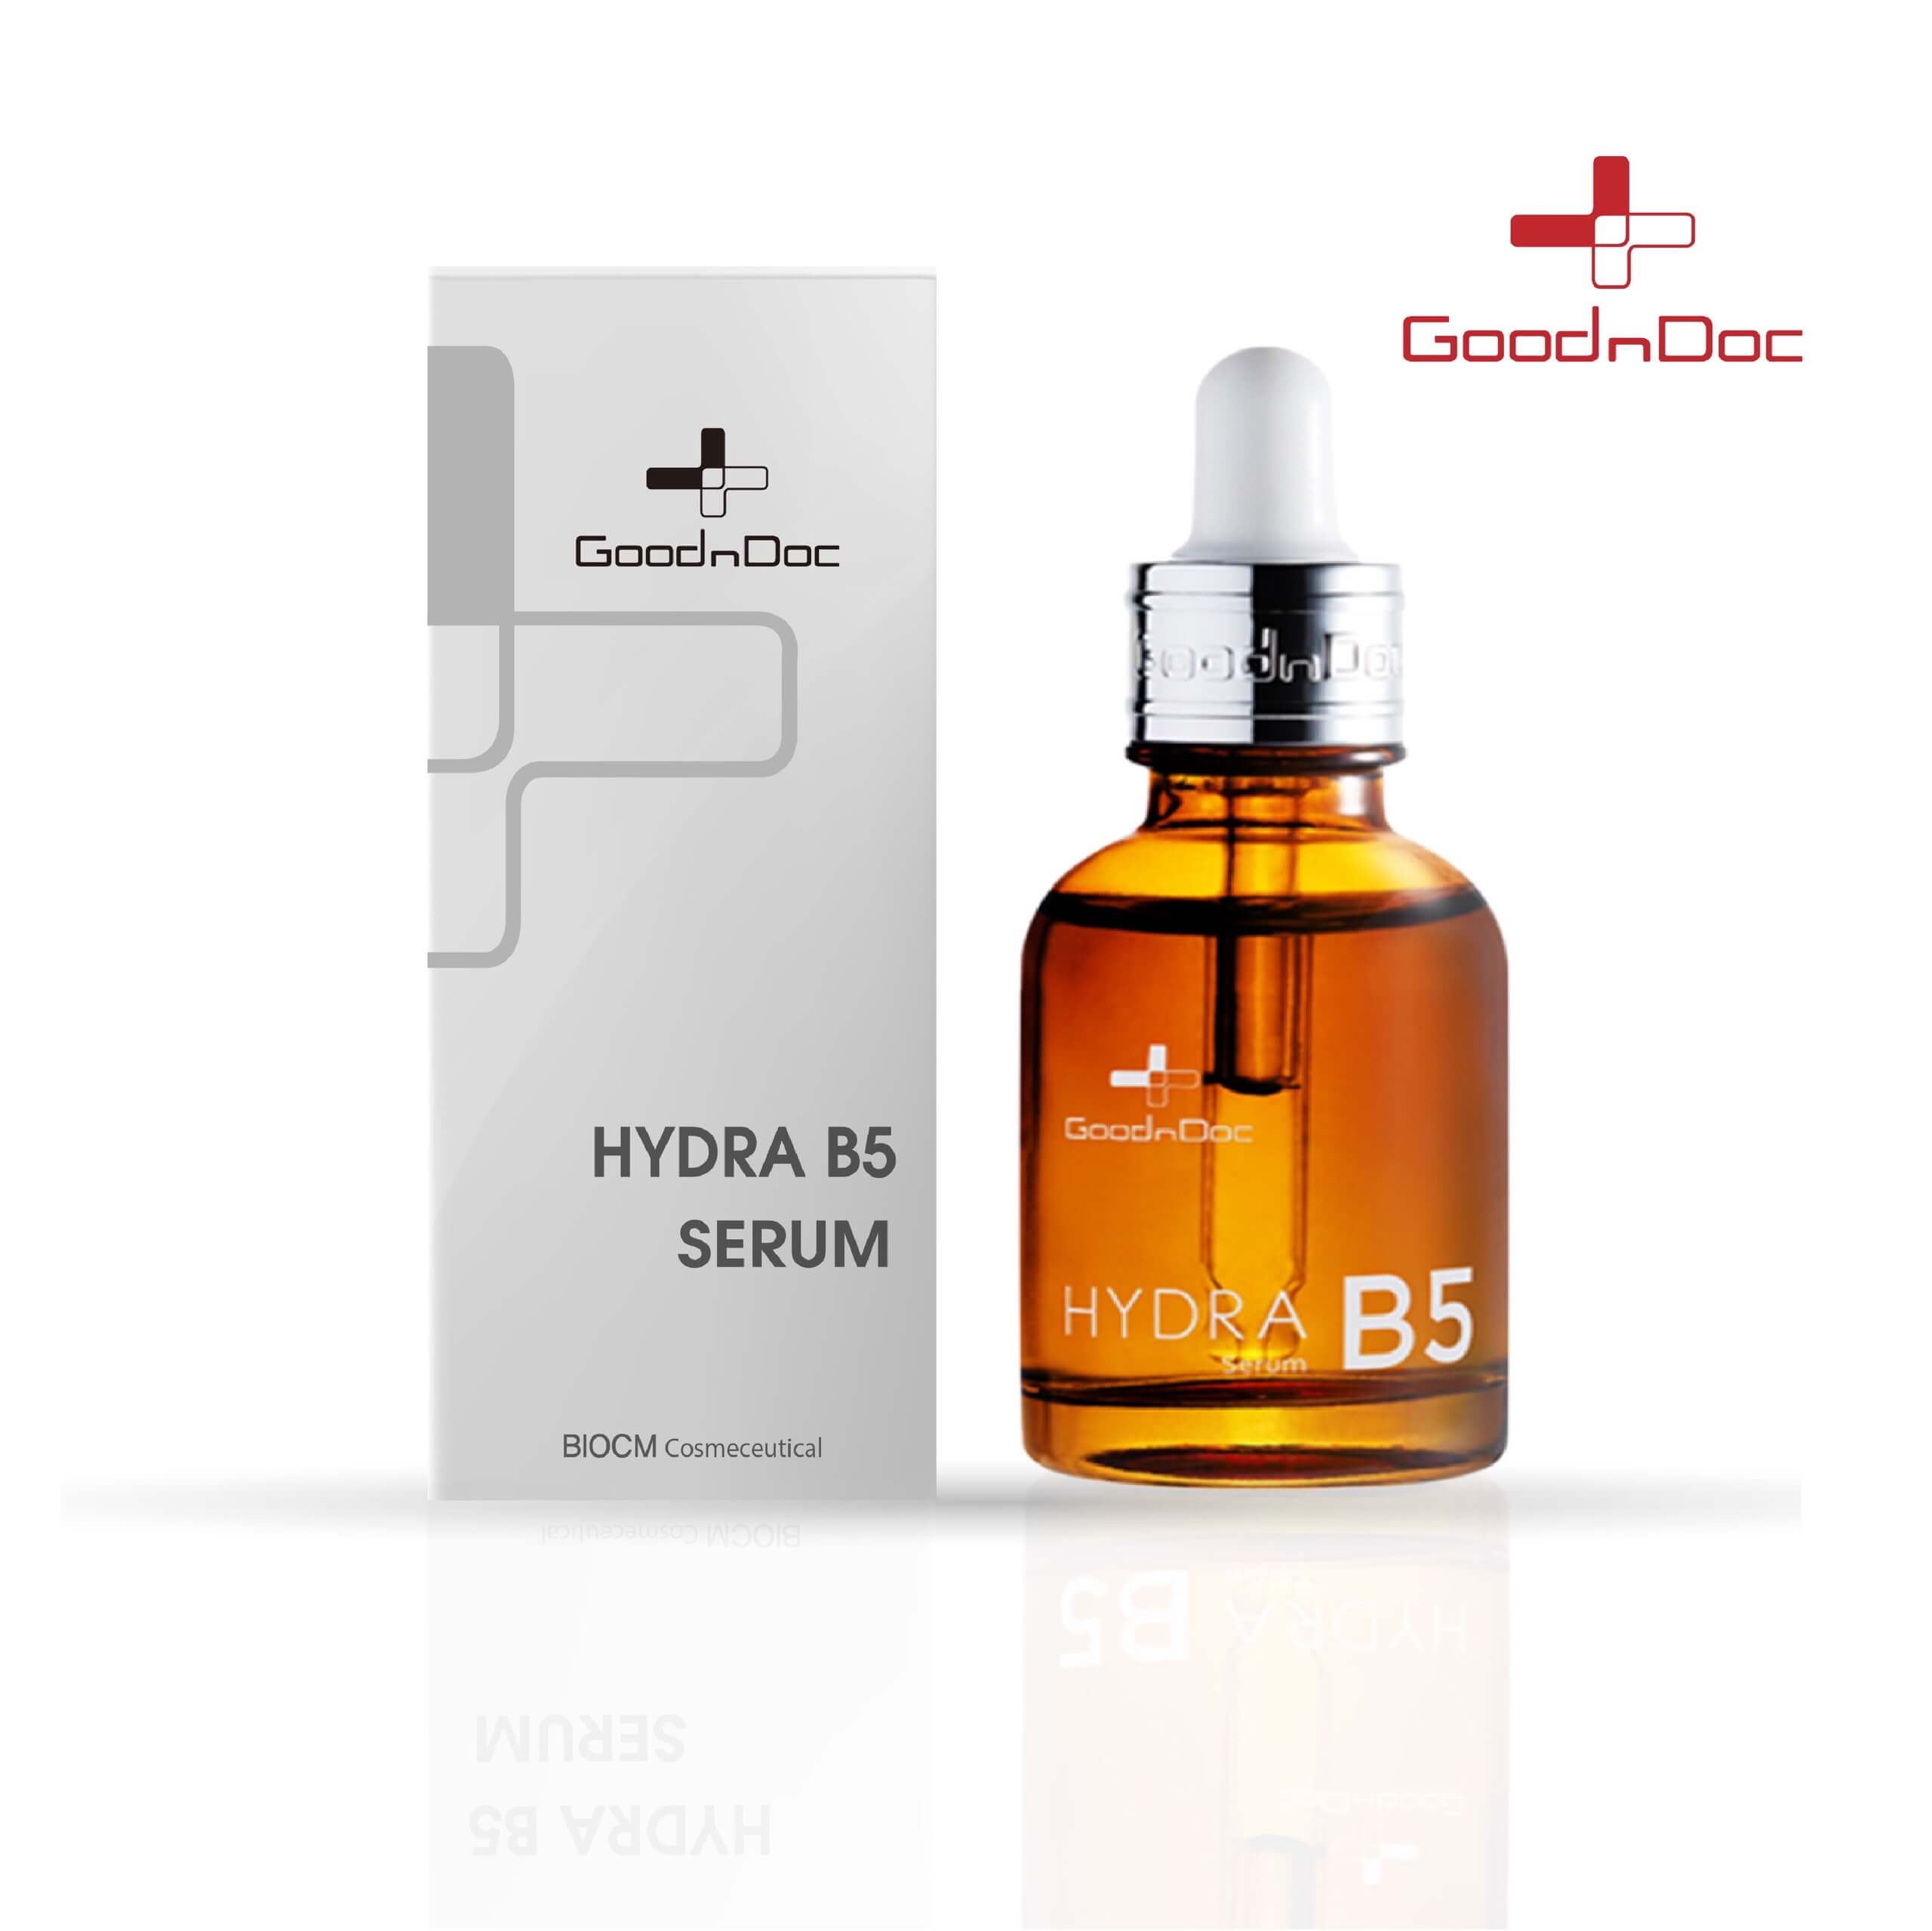 Goodndoc hydra b5 serum 1個